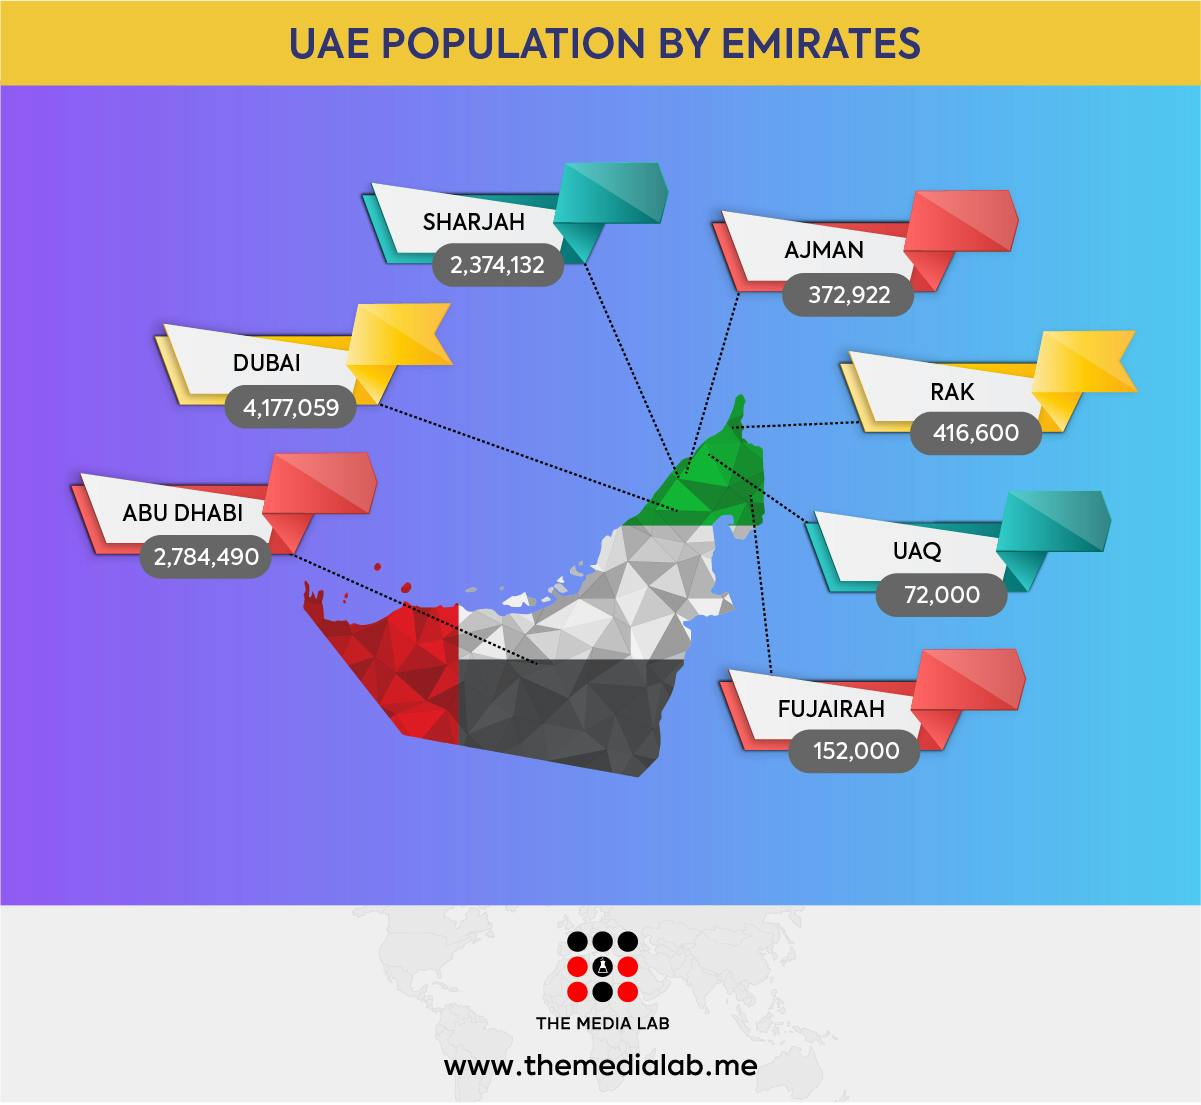 Emirates wise population in UAE 2019